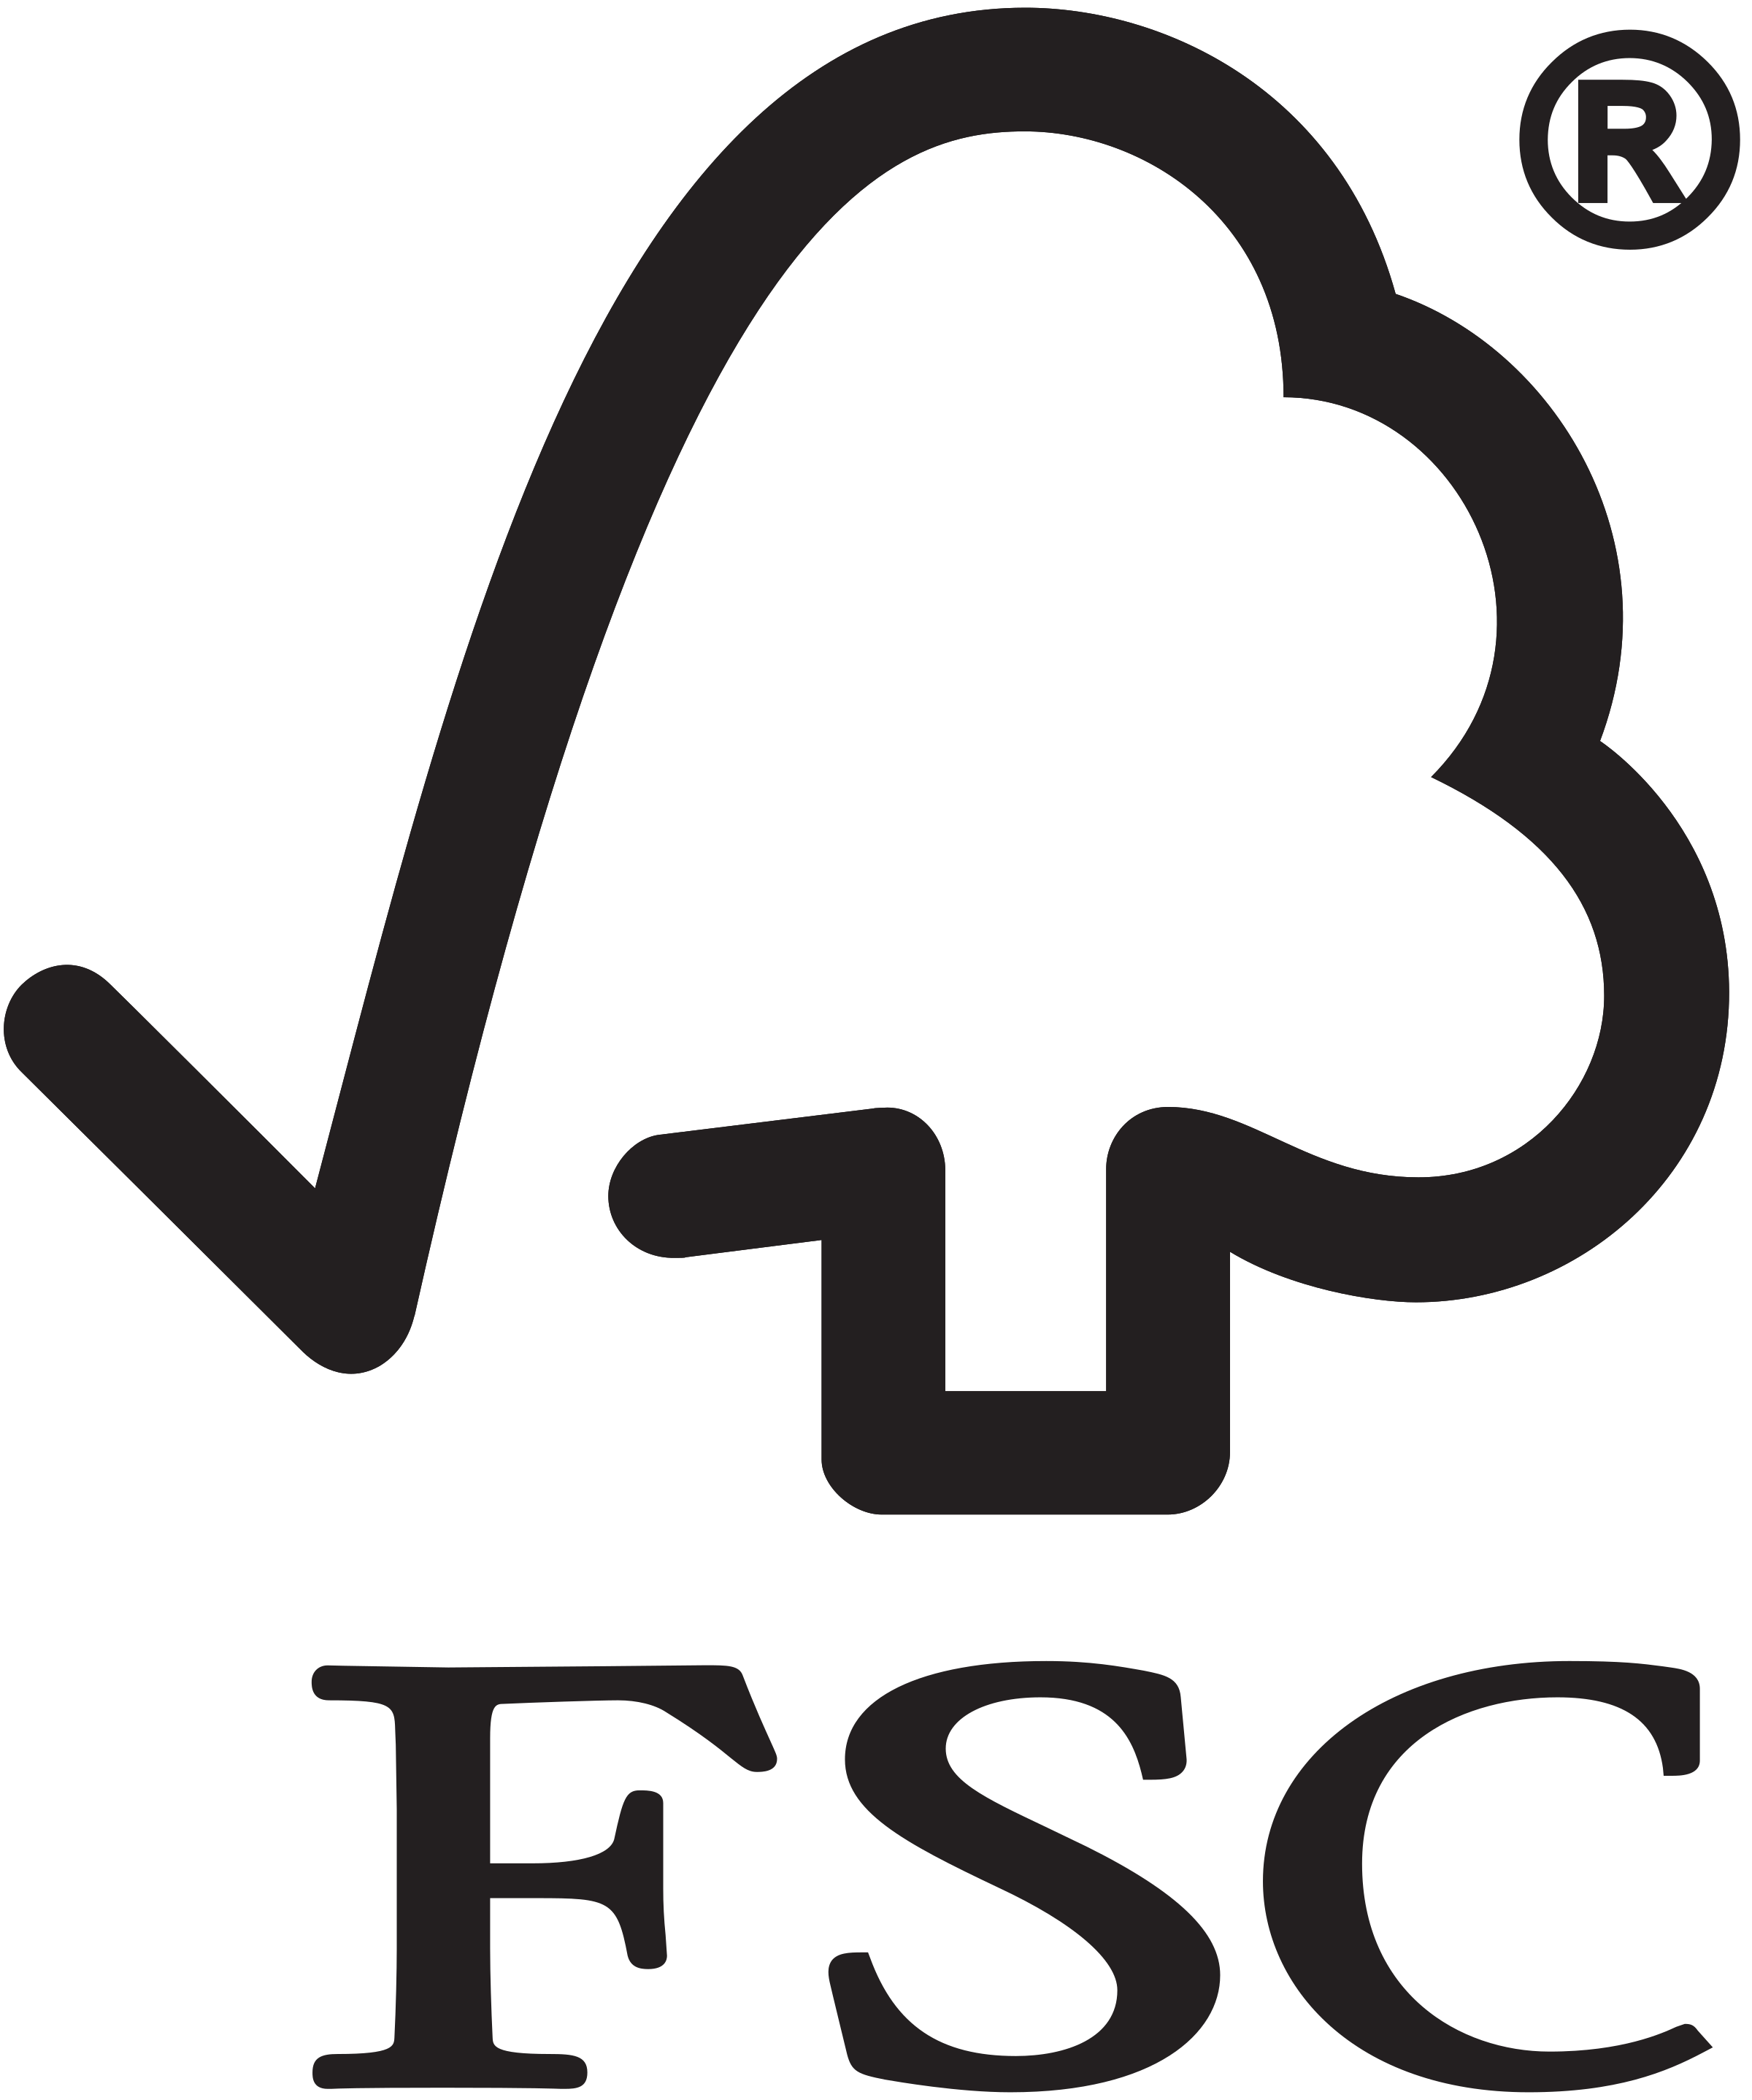 fsc-3-logo-png-transparent